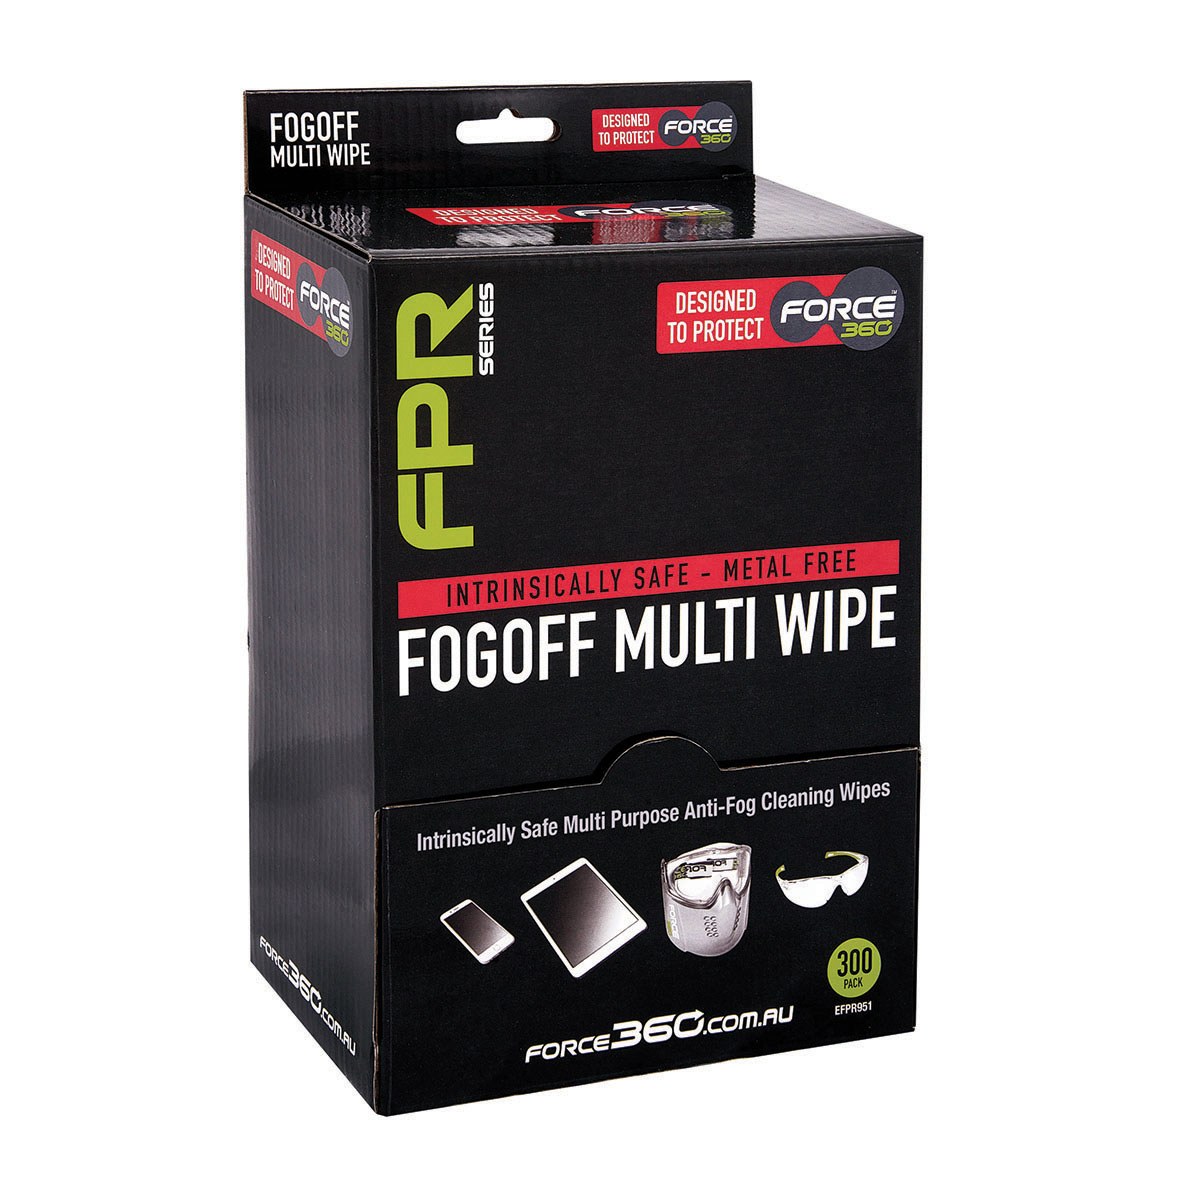 Efpr951 Force360 Fog Off Intrinsically Safe Wipes